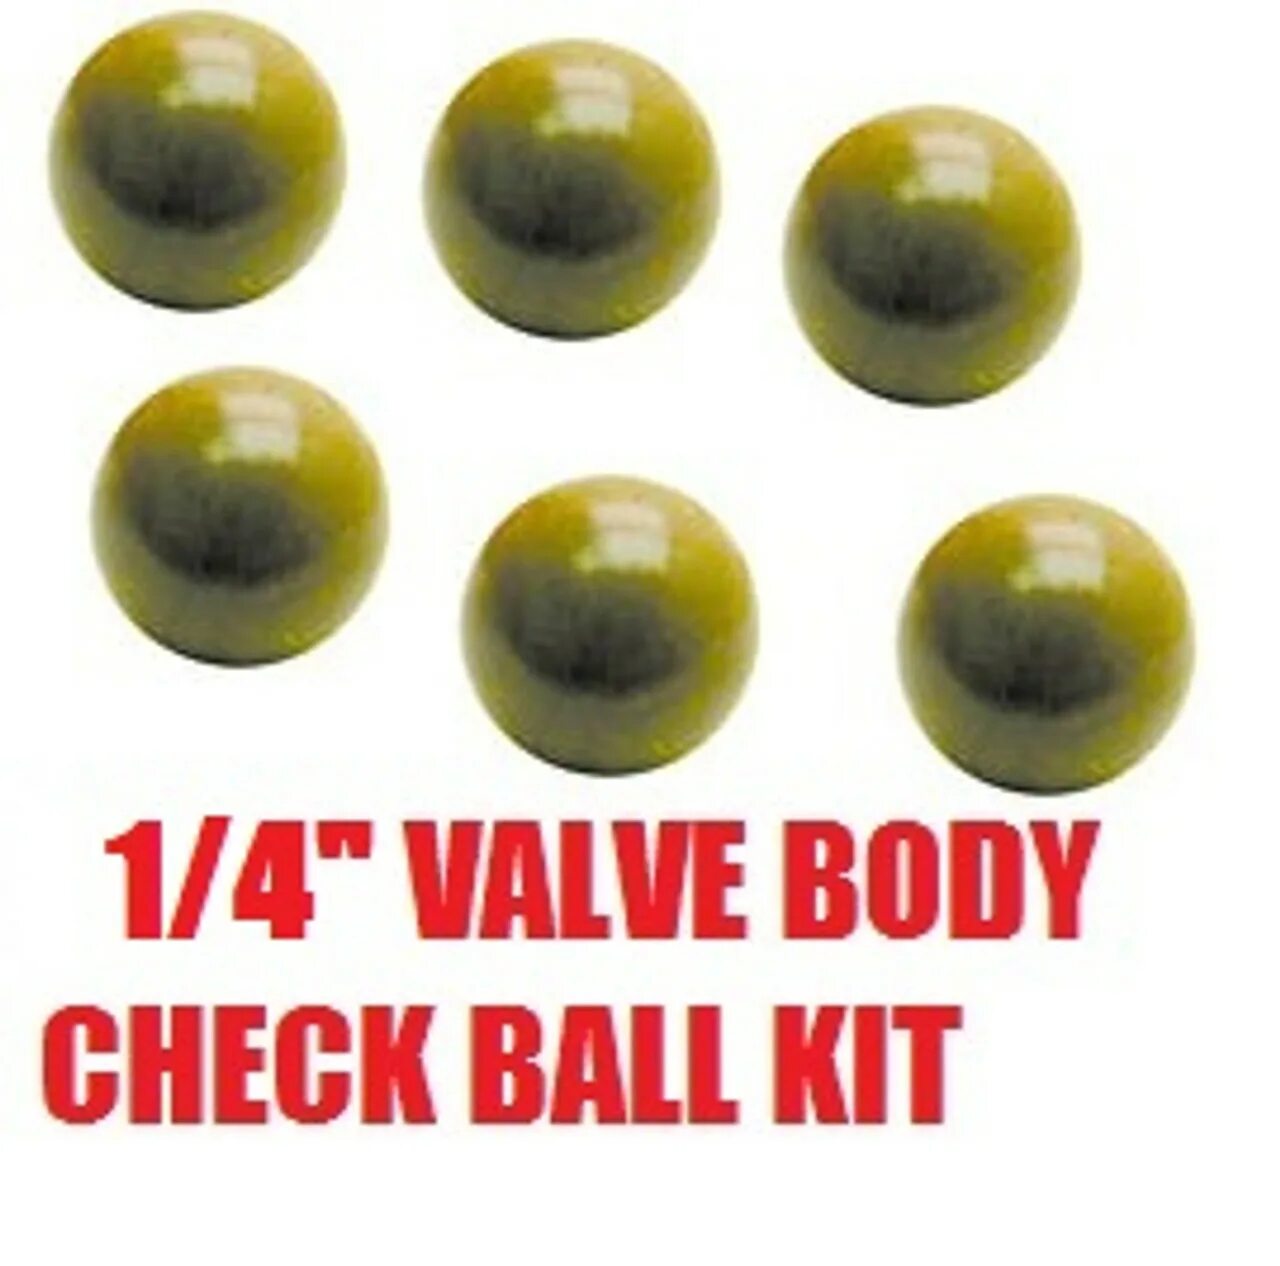 Checkball 6мм. 6l80 Valve body check balls. Check Ball body. Steel check Ball. Check balls